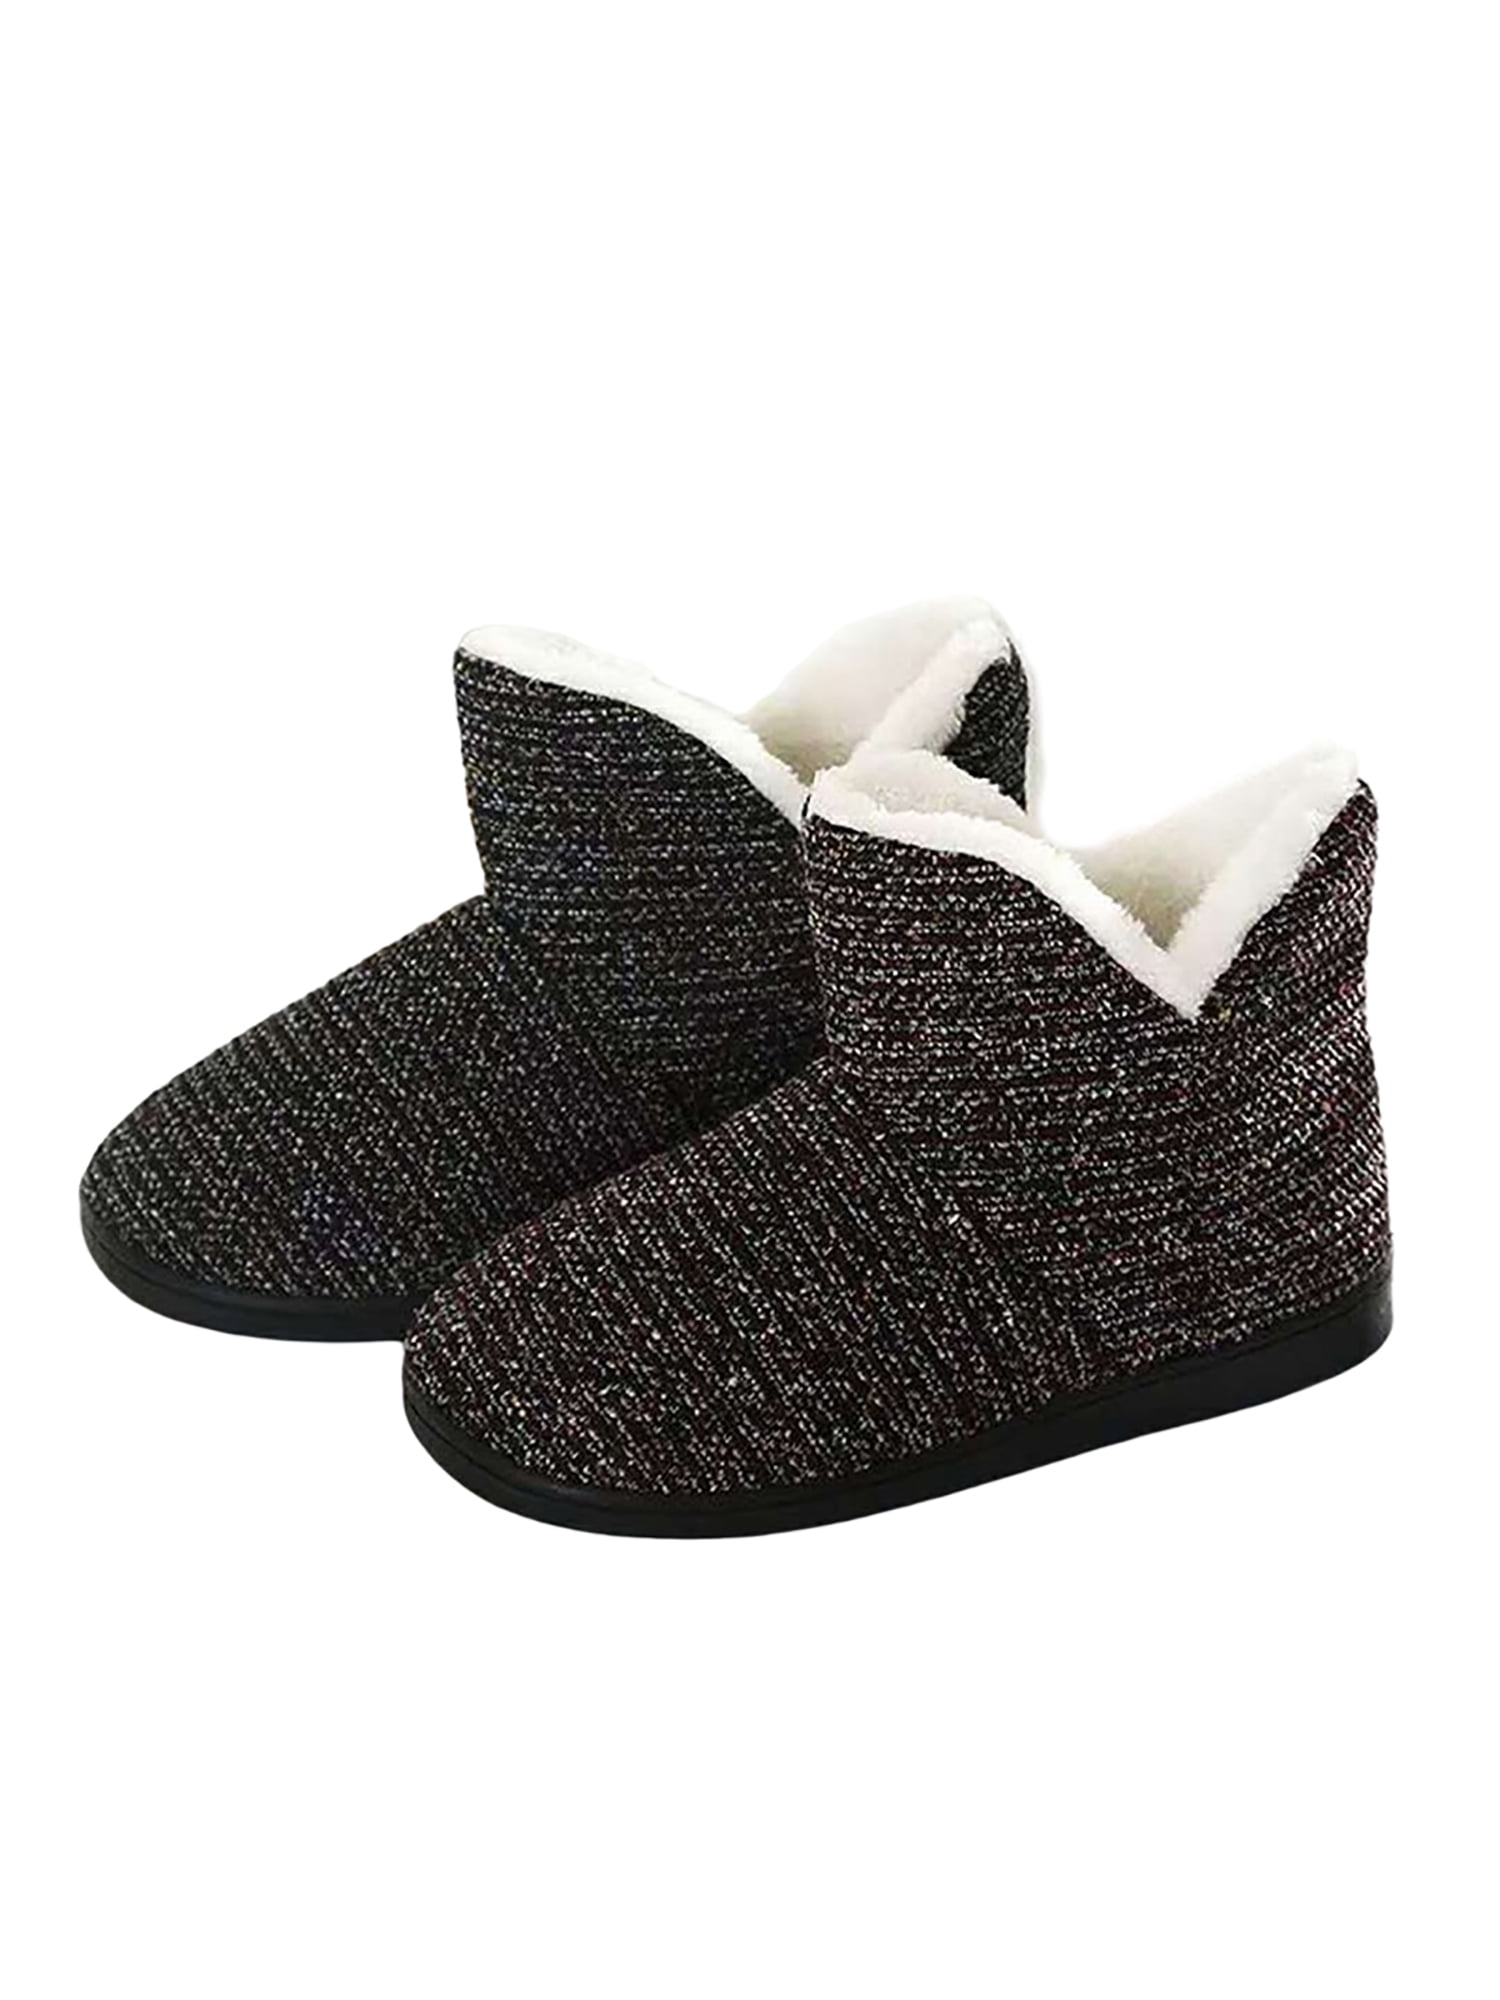 Fashion Winter Women Slippers Shoes Unisex Fur Boots Home Female Warm Short  Plush Men Indoor Cotton Shoes Ankle Boots Feminina Botas-Khaki @ Best Price  Online | Jumia Egypt